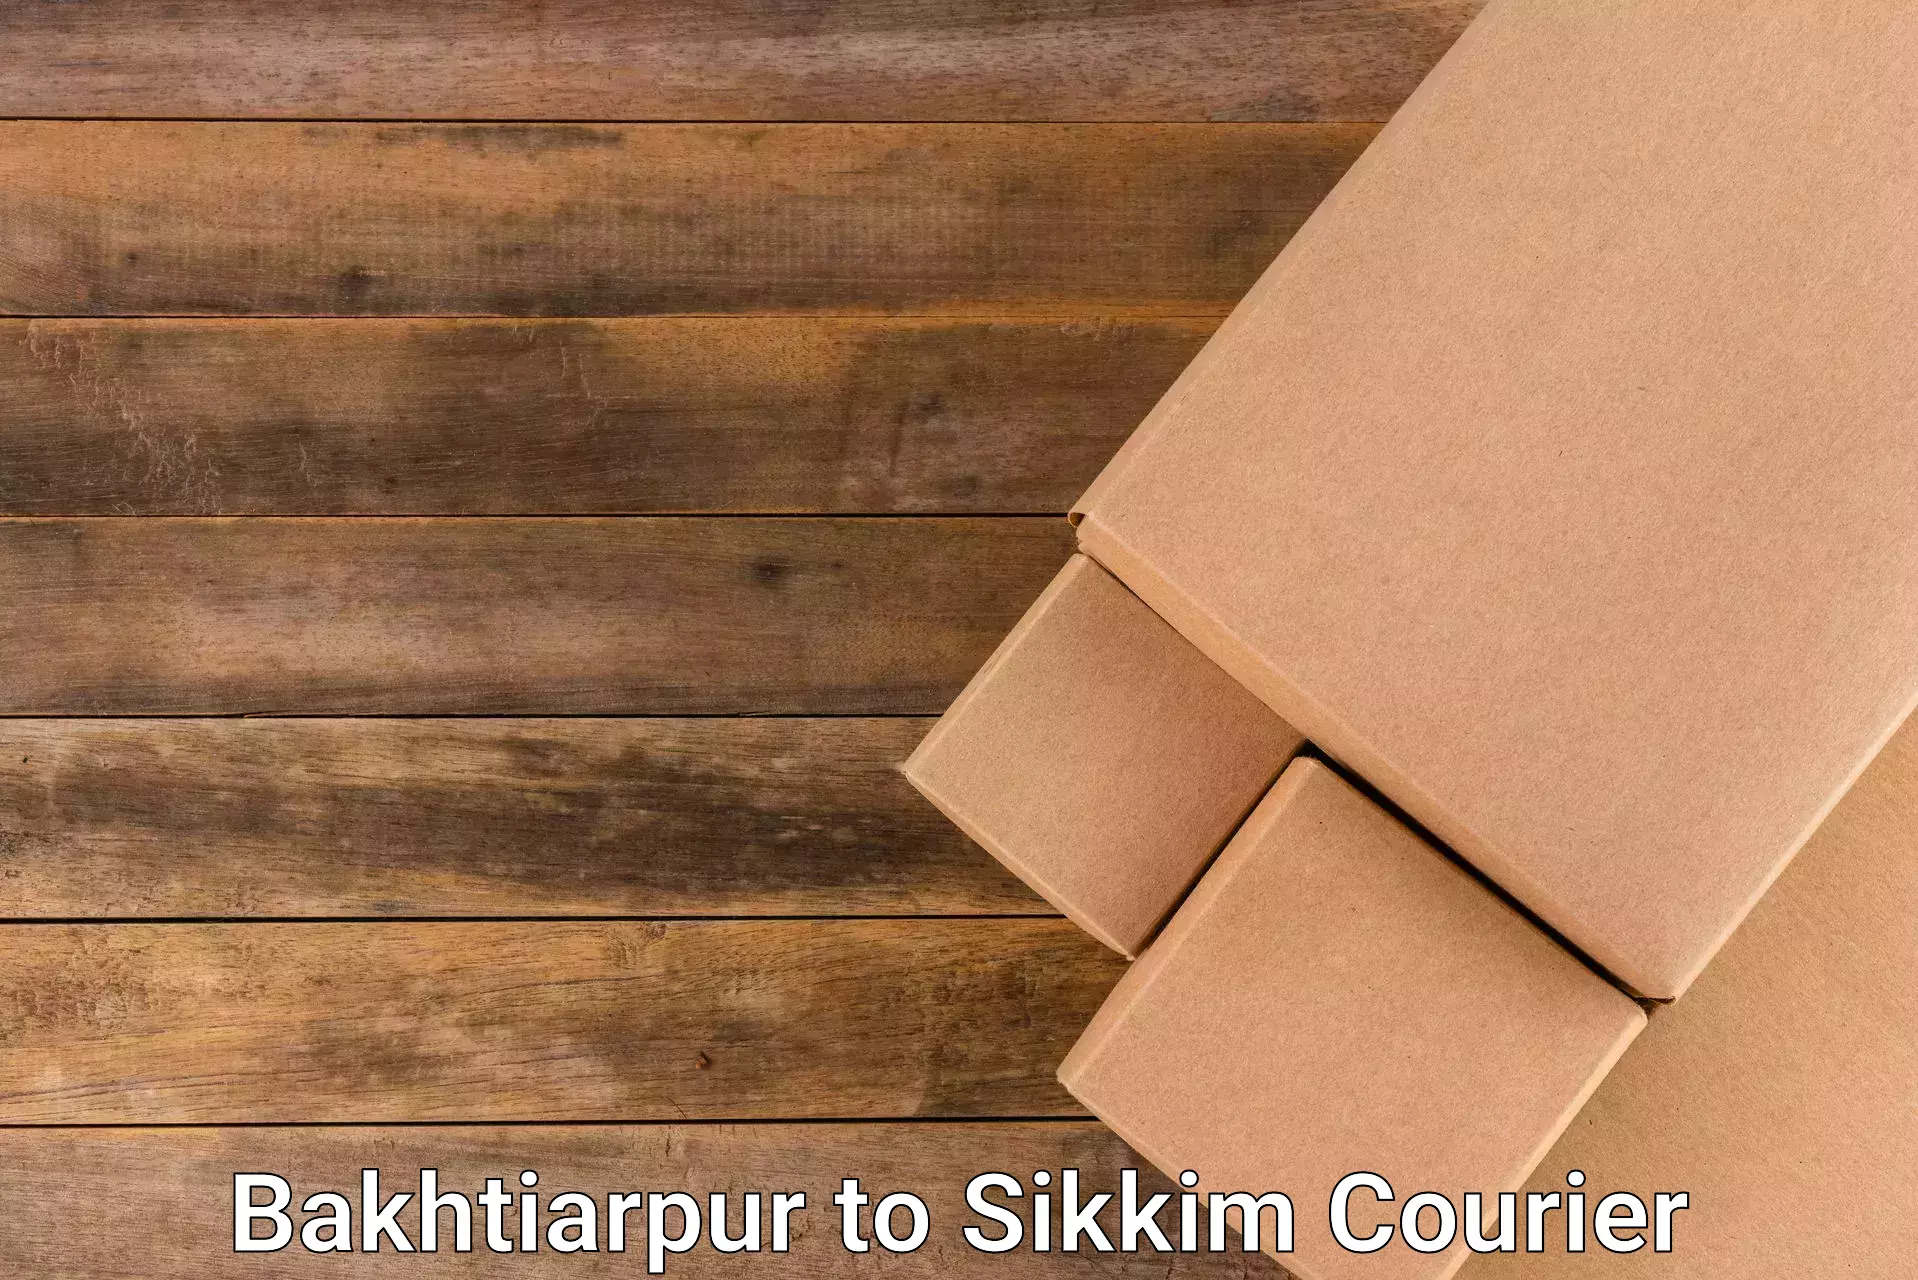 Courier app Bakhtiarpur to Sikkim